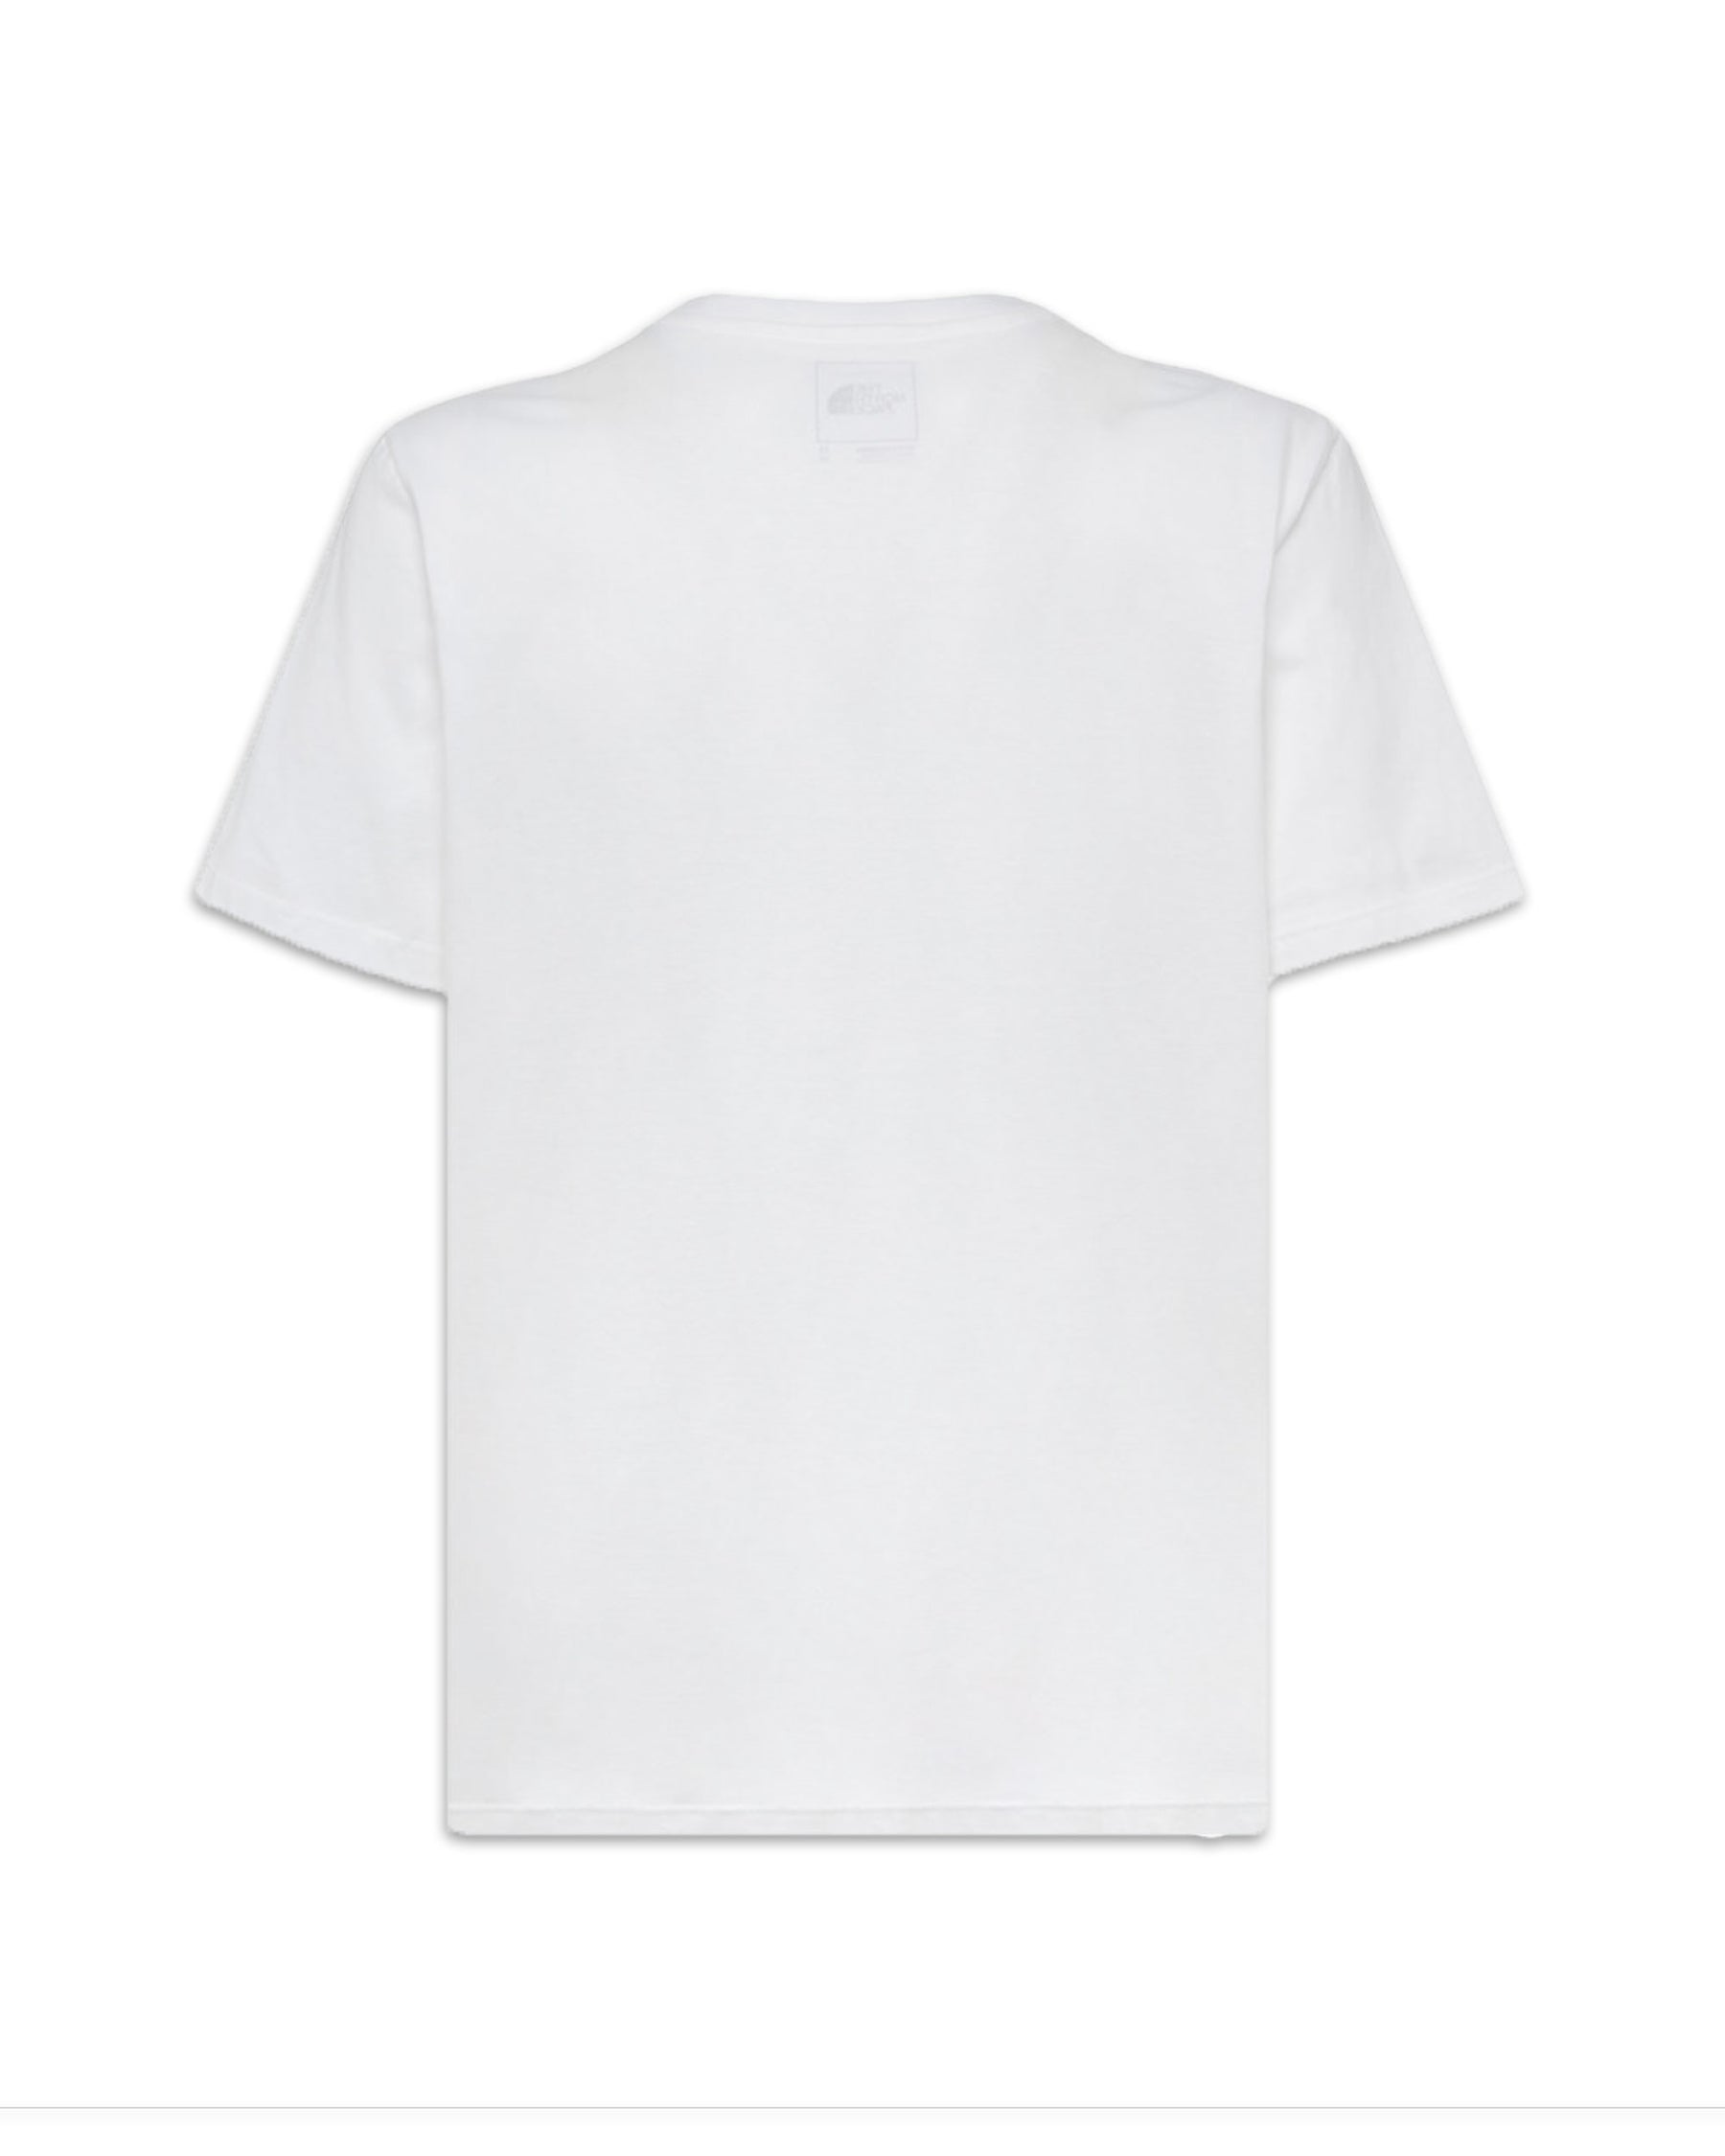 T-Shirt Uomo The North face Pride Bianco